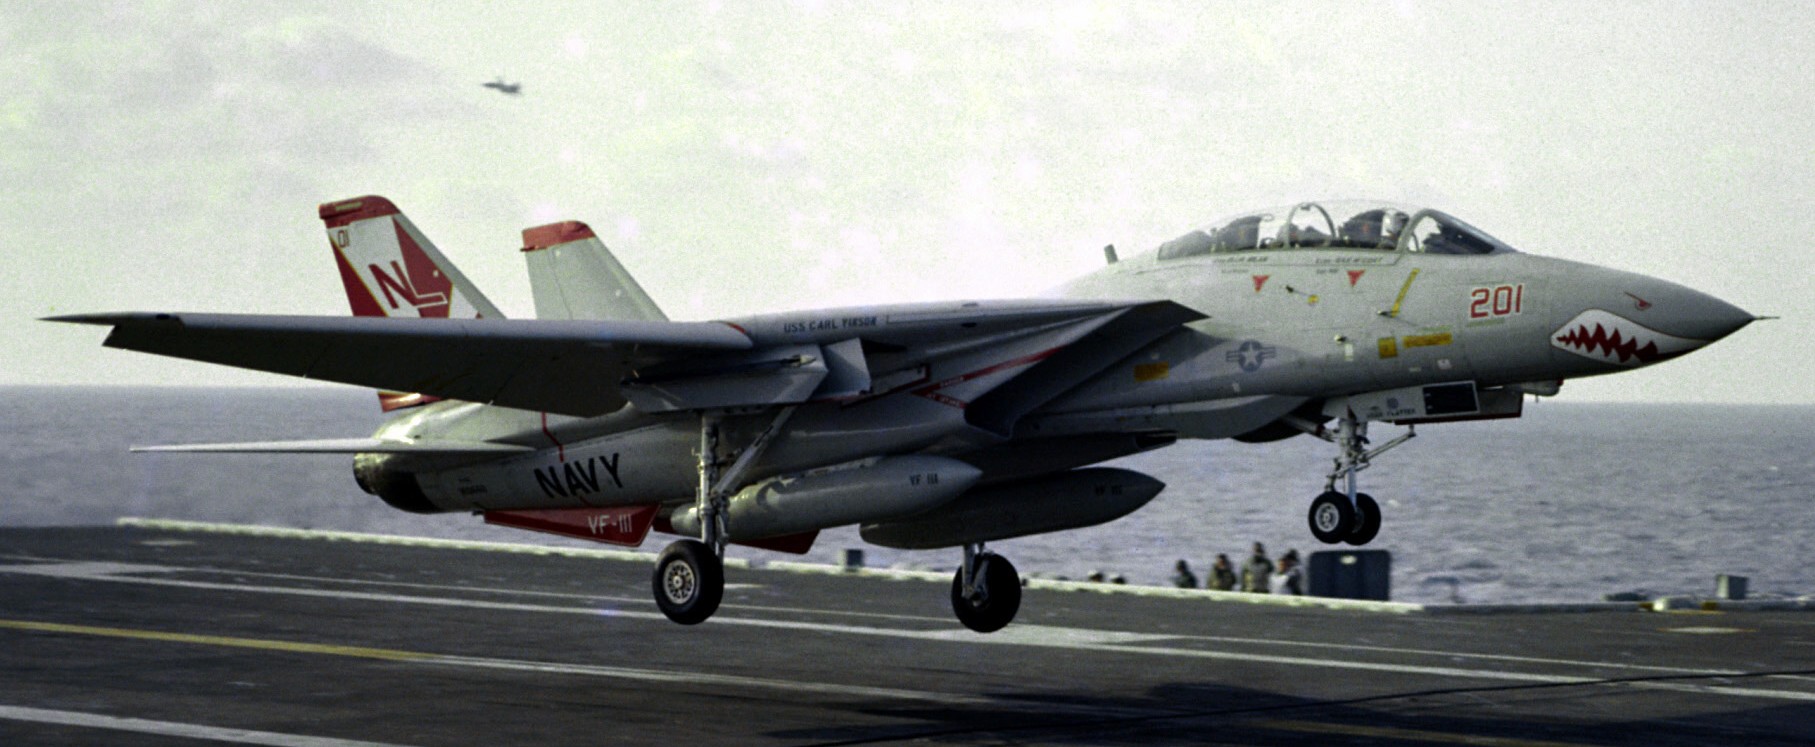 vf-111 sundowners fighter squadron f-14a tomcat cvw-15 uss carl vinson cvn-70 us navy 16